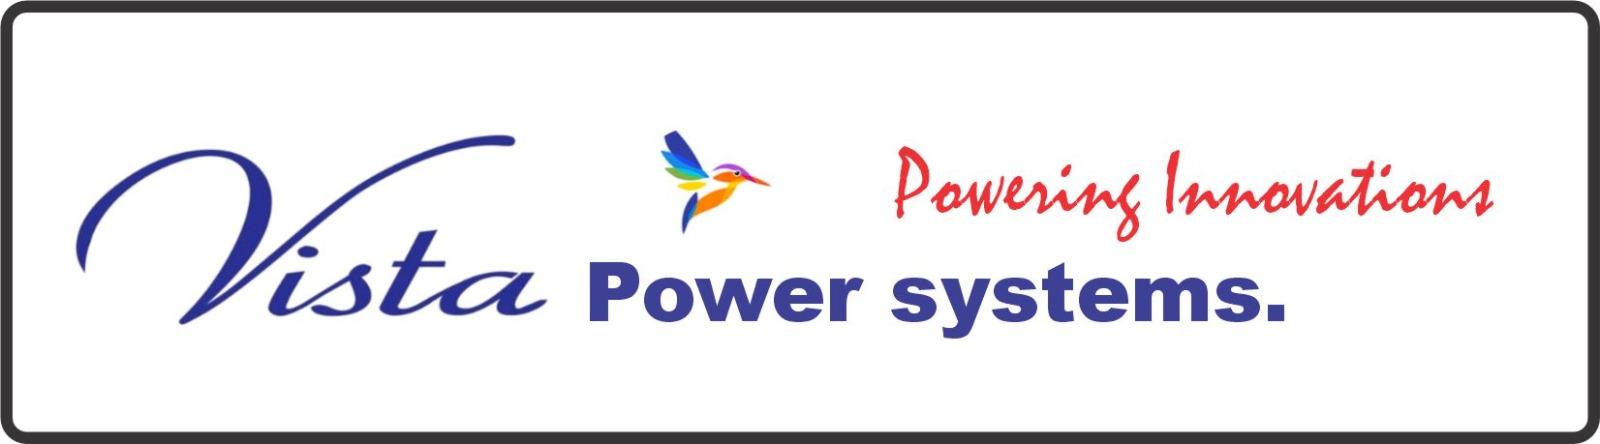 Vista Power Systems